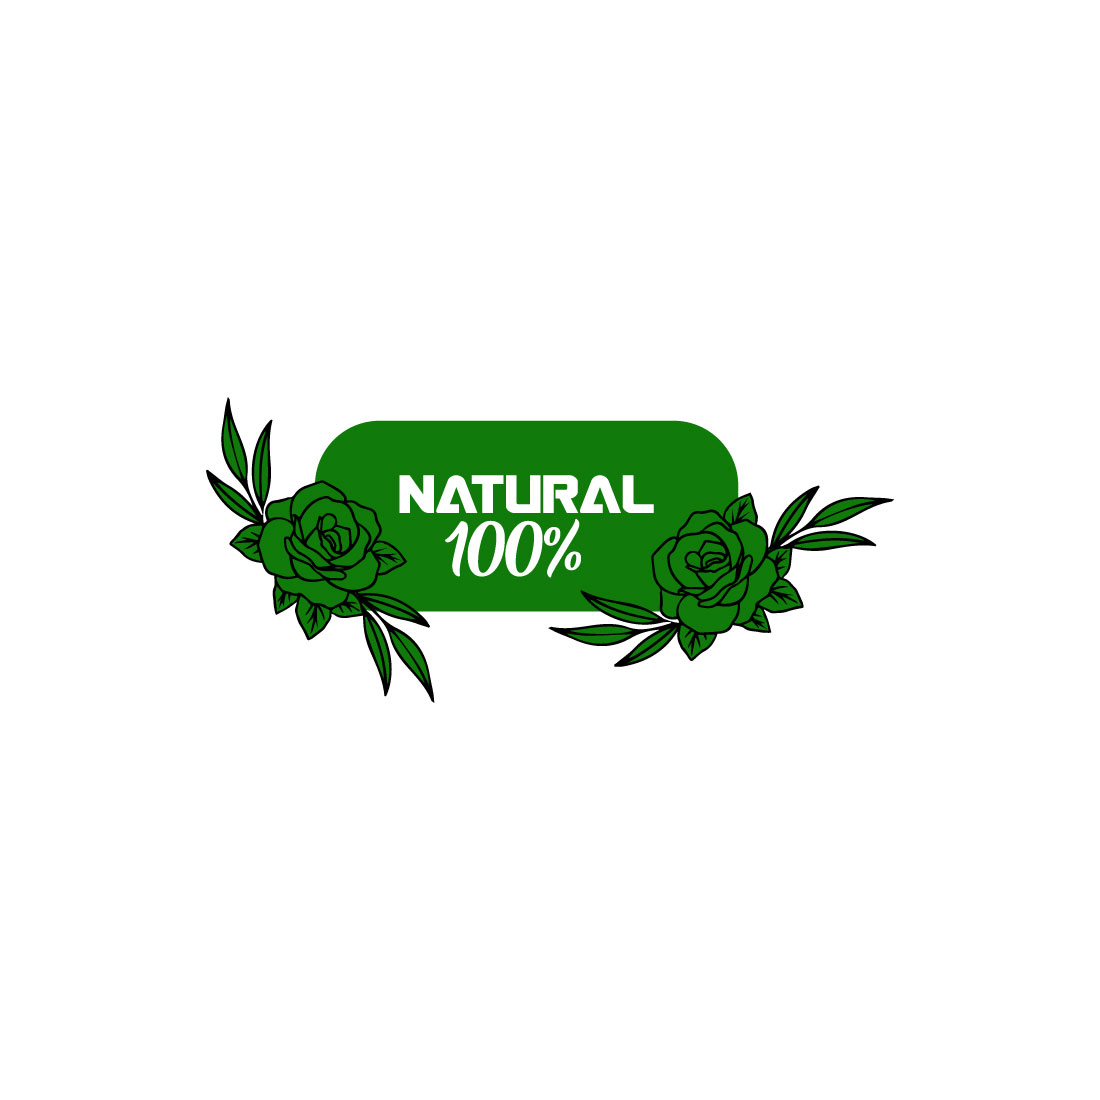 Free 100 natural logo preview image.